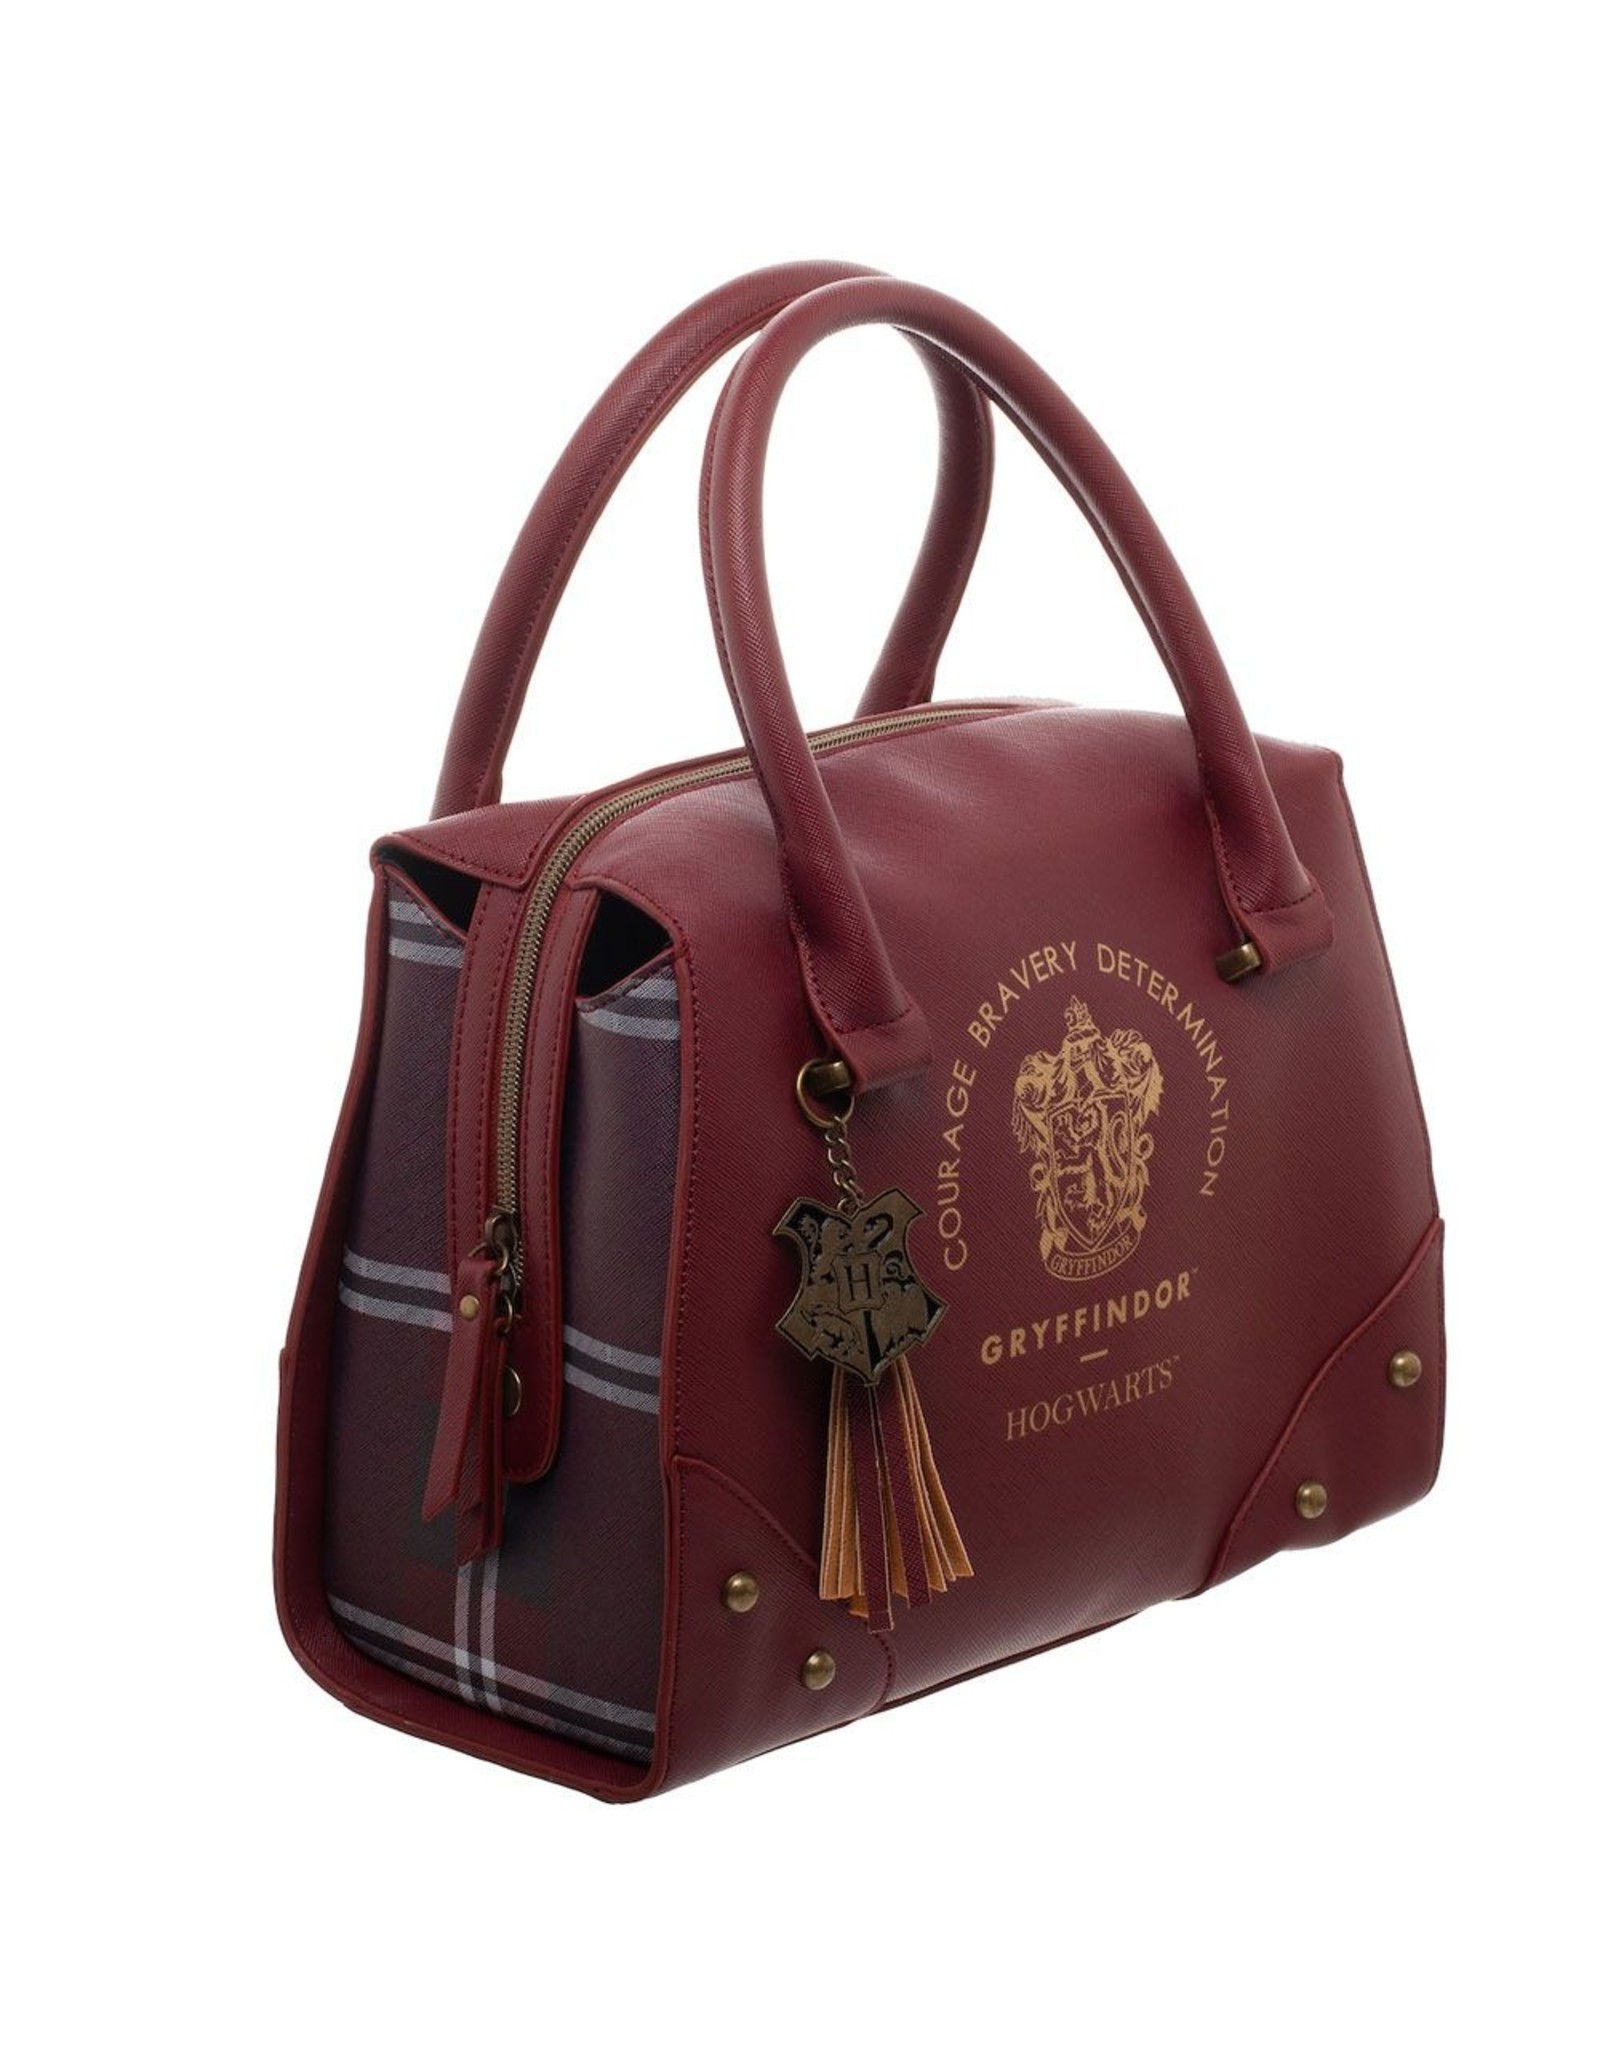 Harry Potter Merchandise - Harry Potter Gryffindor Luxury Handbag with Plaid Sides